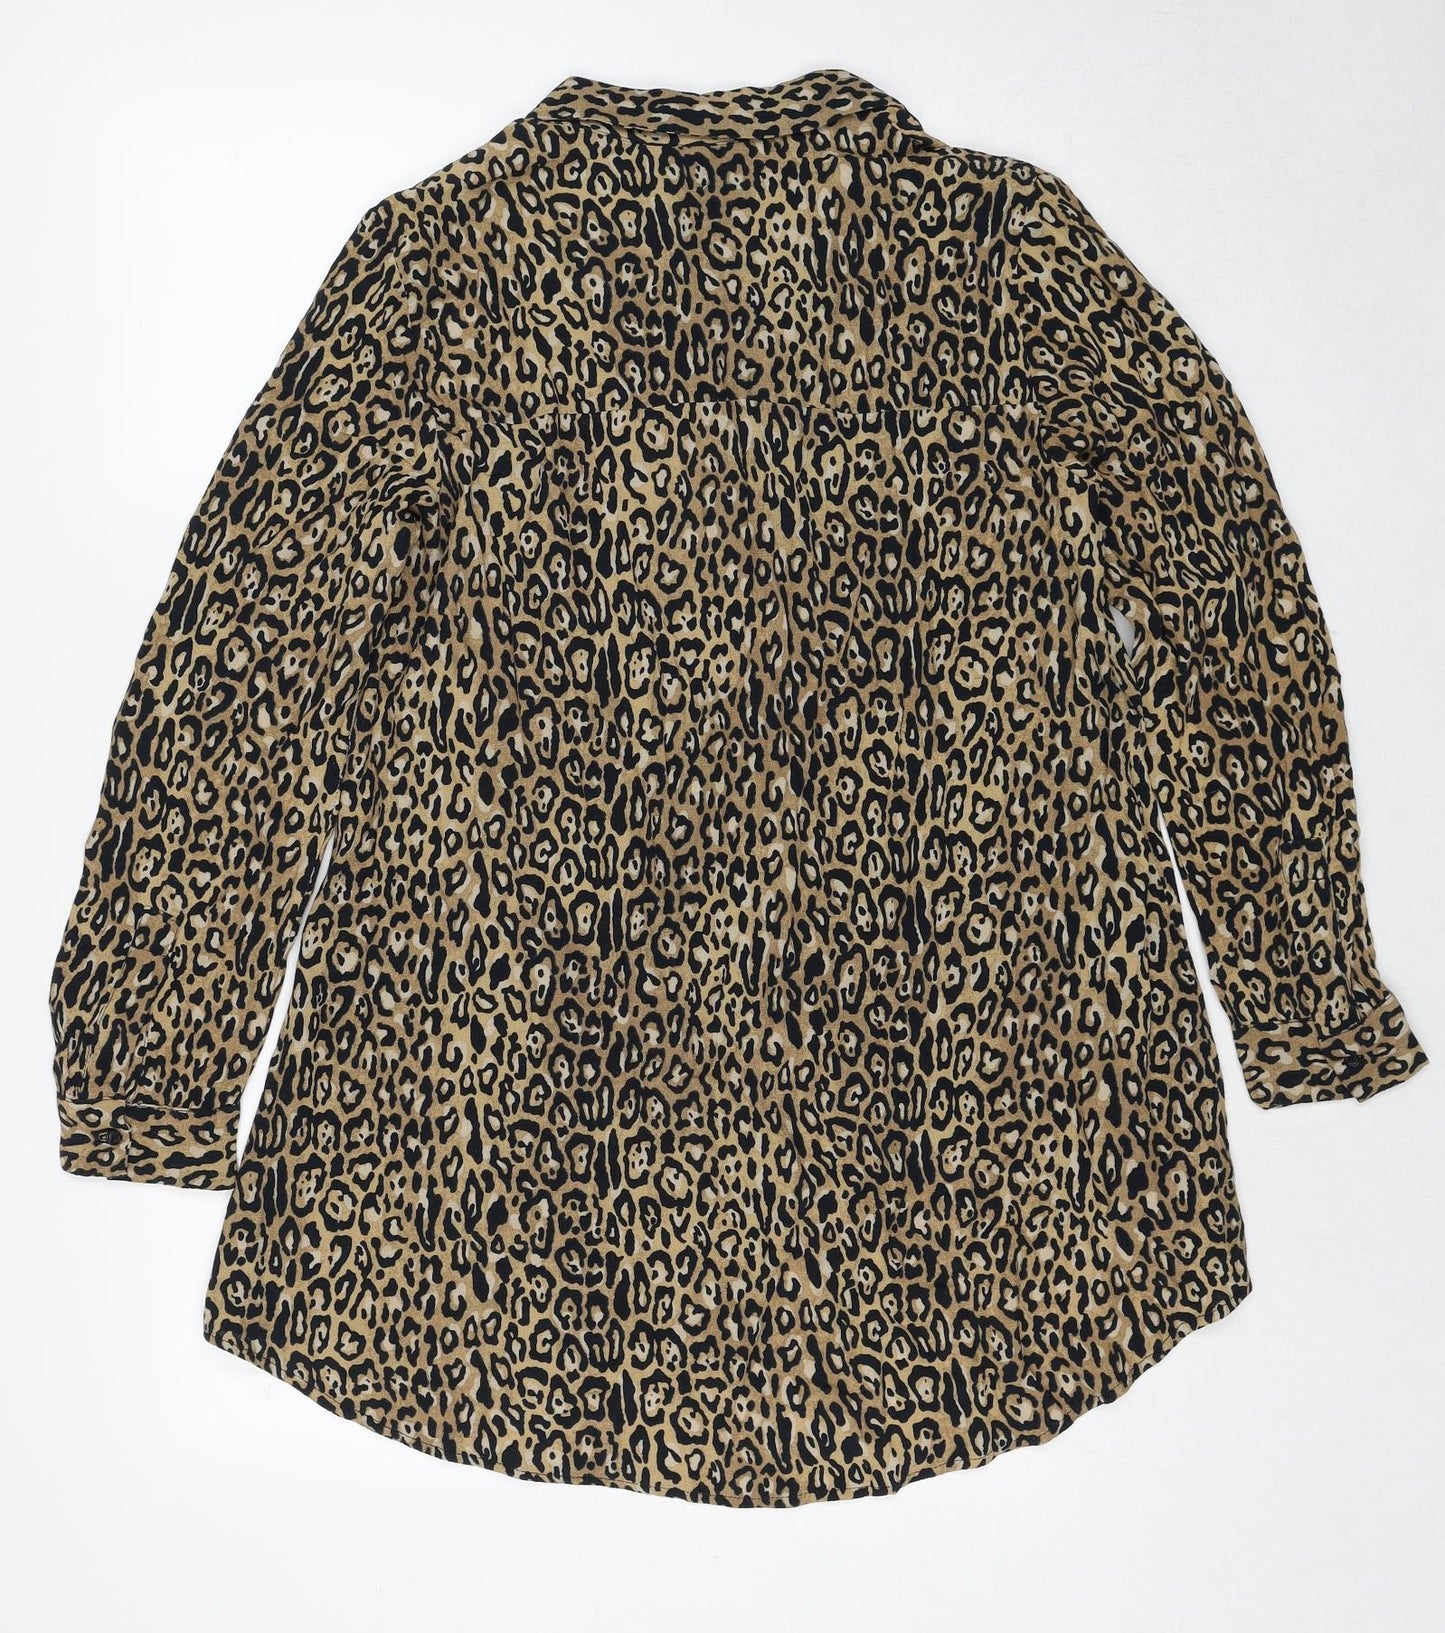 Zara Womens Brown Animal Print Polyester Shirt Dress Size S Collared Button - Leopard Print